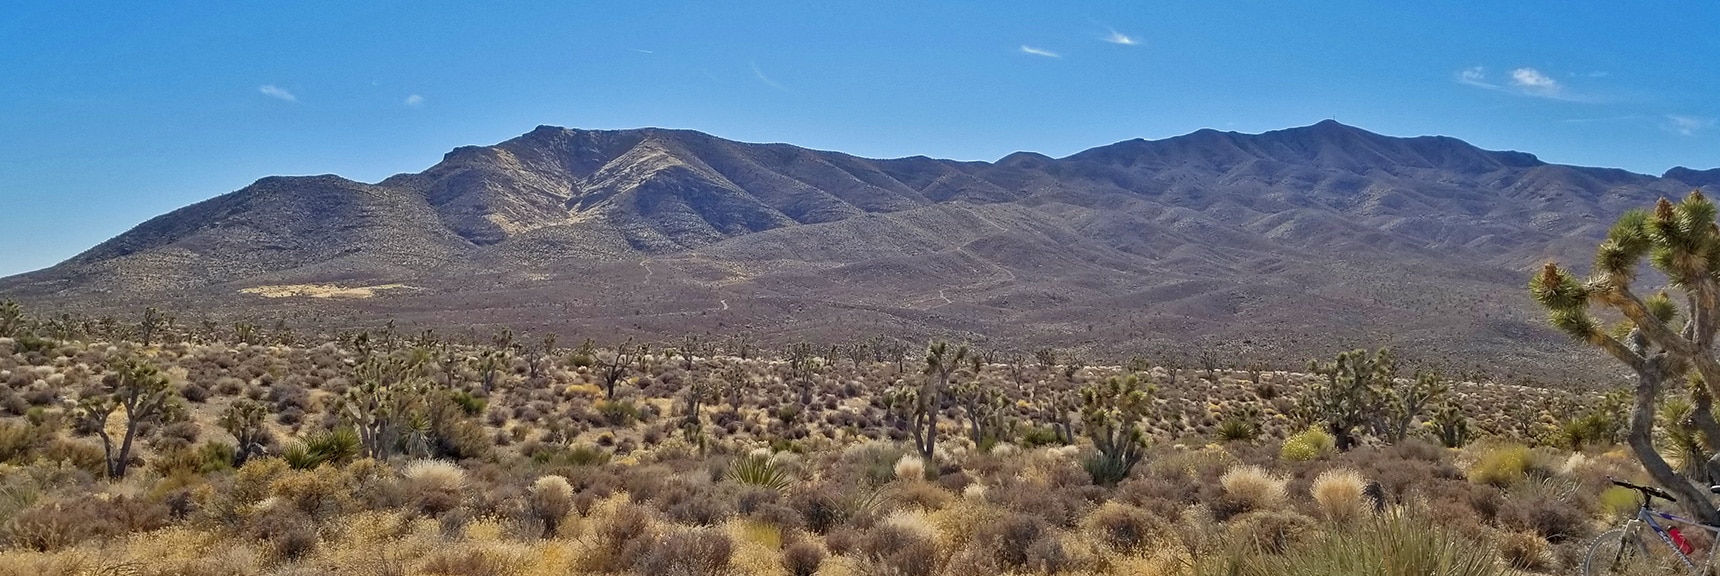 Summit and Northeastern Edge of Gass Peak from Gass Peak Road Near Trailhead. Trail in View | Gass Peak Road Circuit | Desert National Wildlife Refuge | Nevada